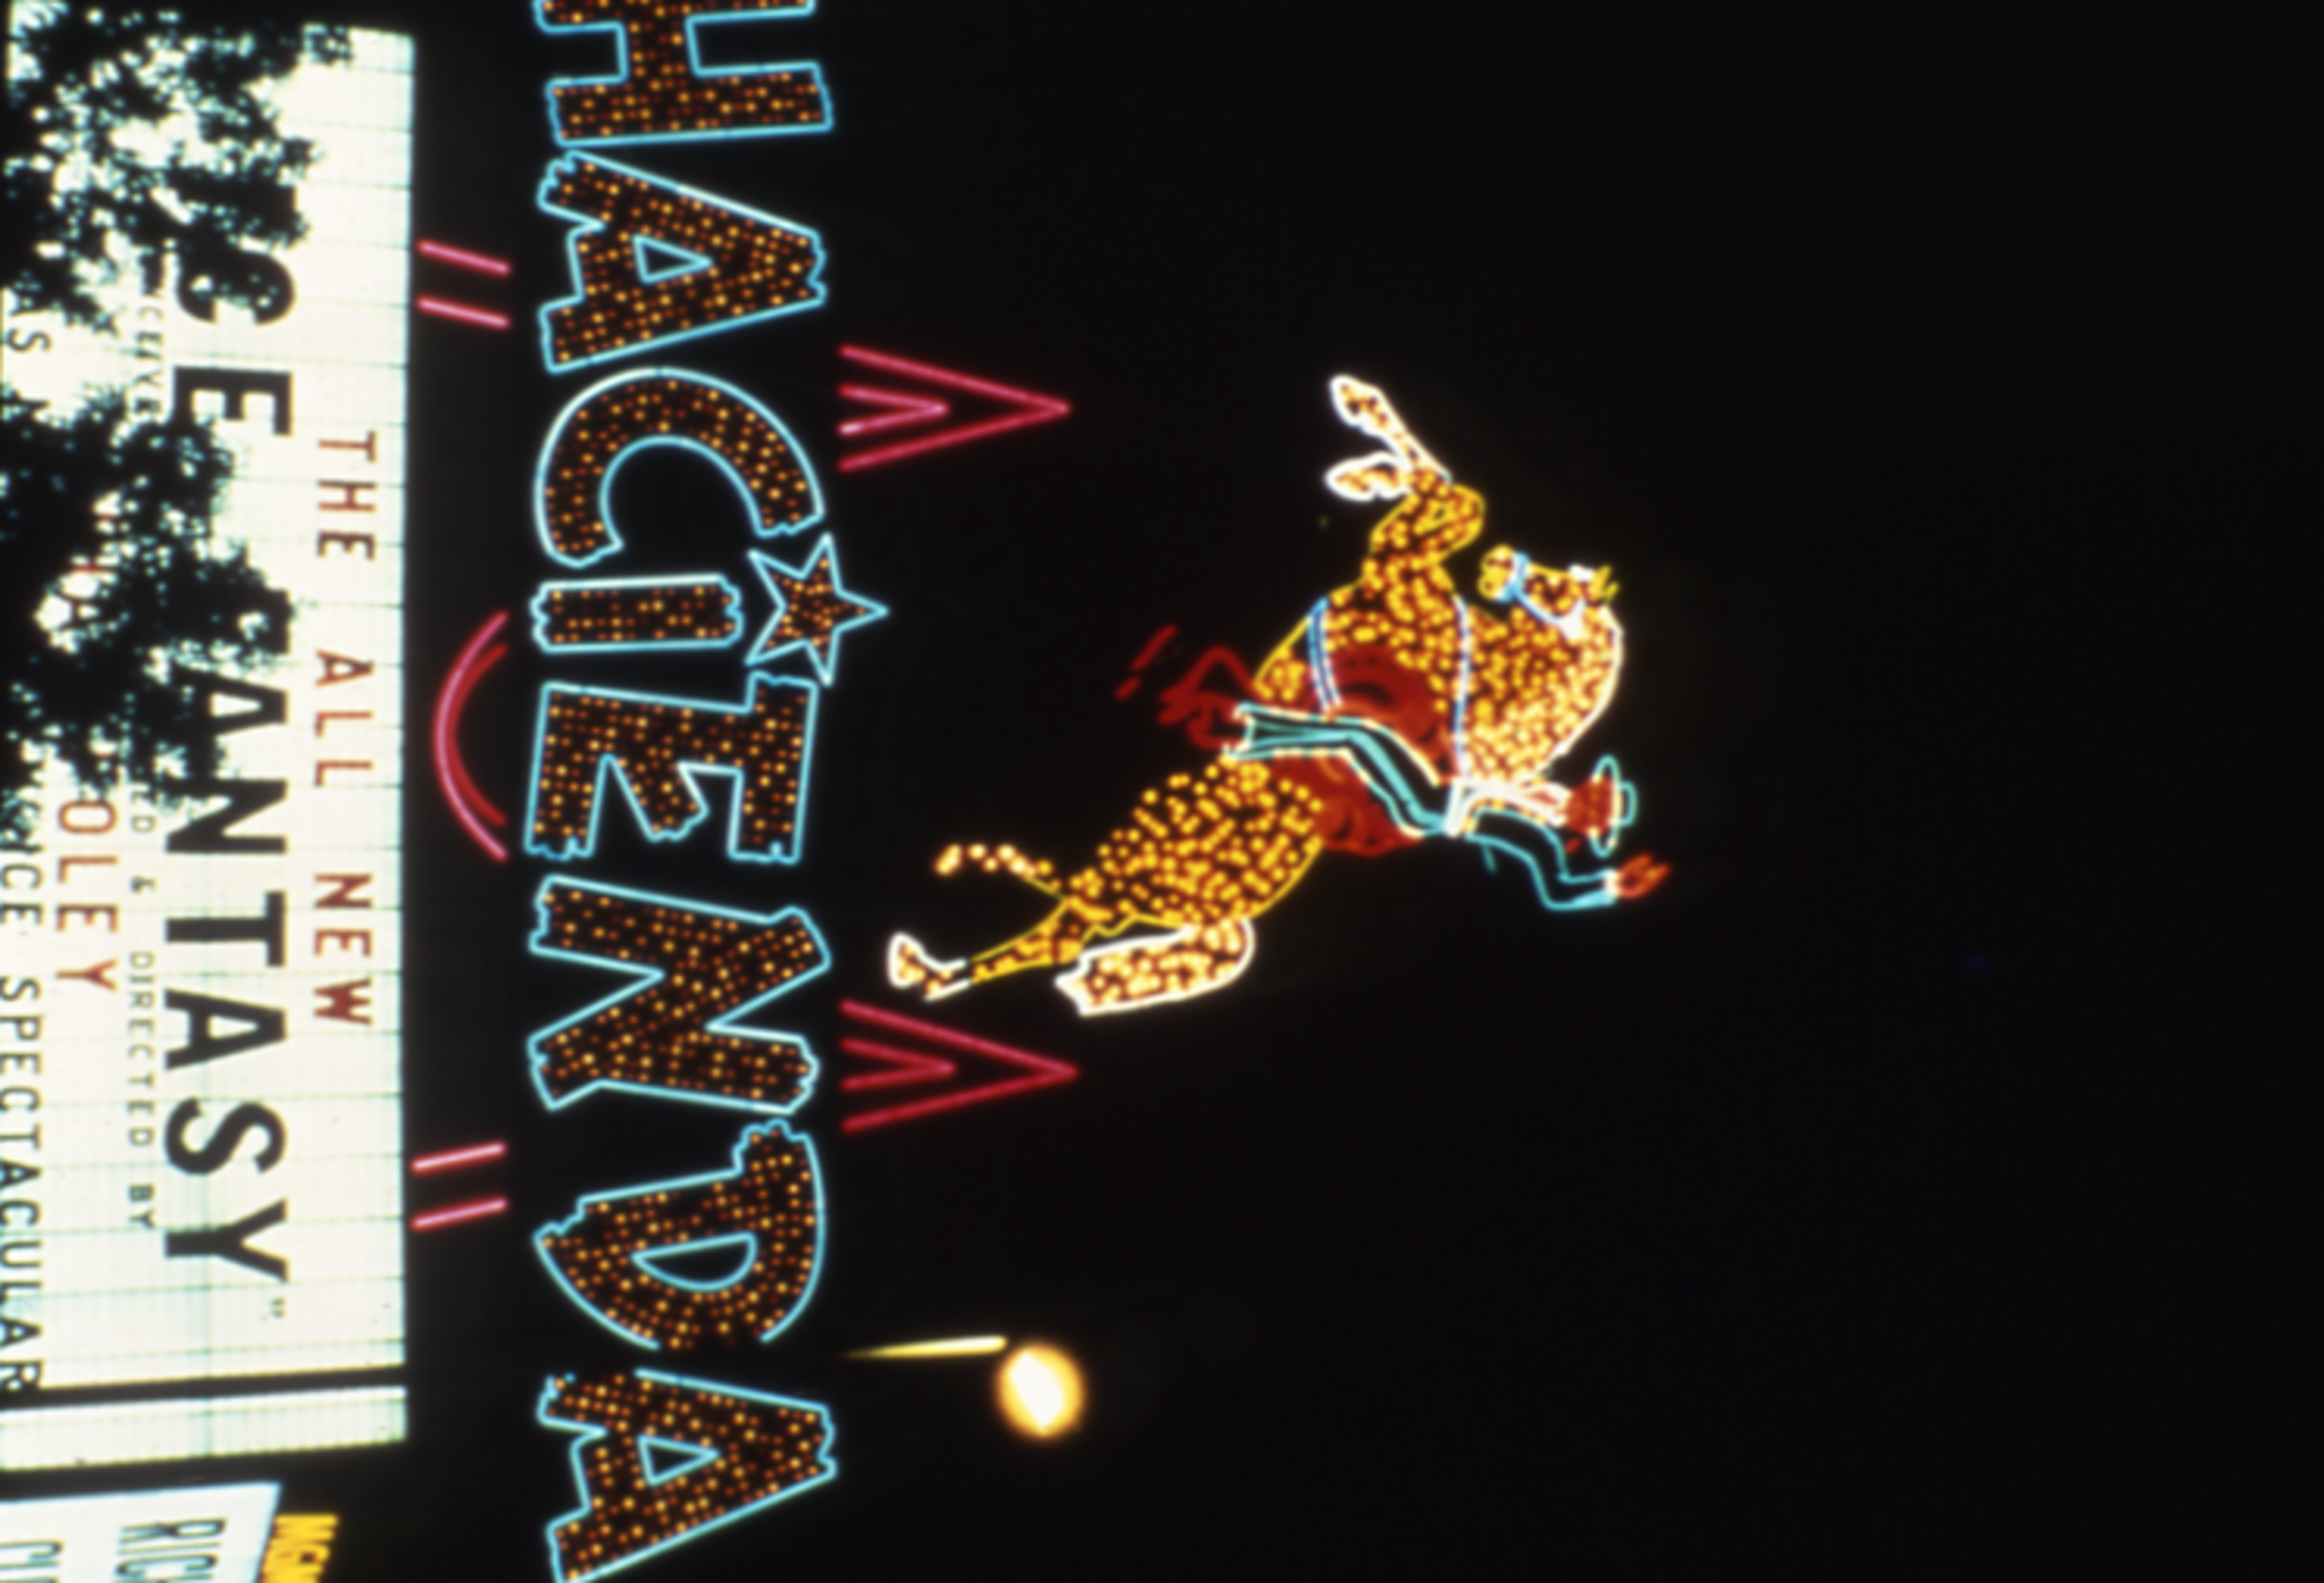 Slide of the Hacienda Hotel sign, Las Vegas, circa 1980s